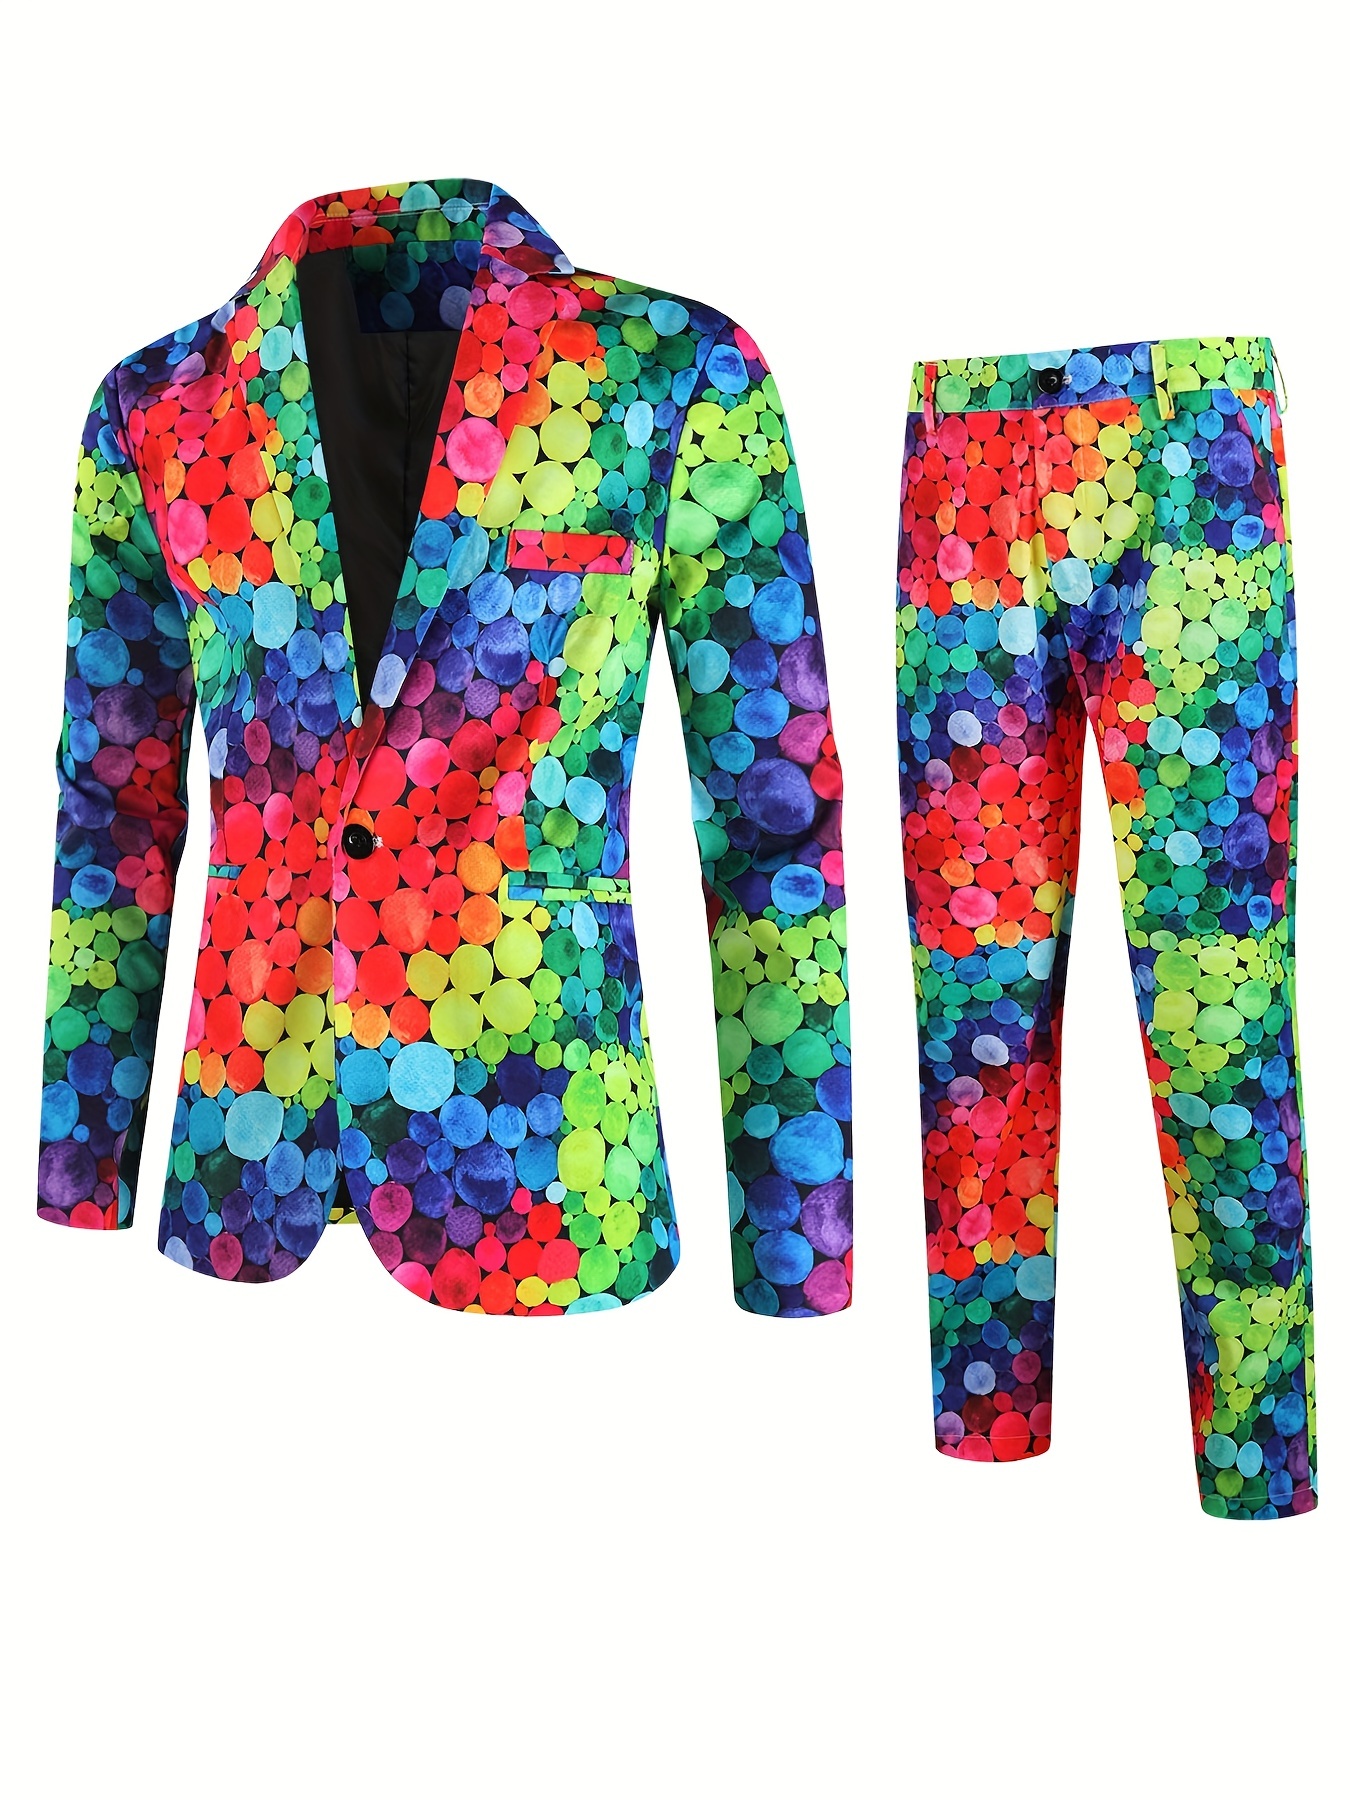 Origami suit, paper suit, clothes, jacket, shirt and trousers, men